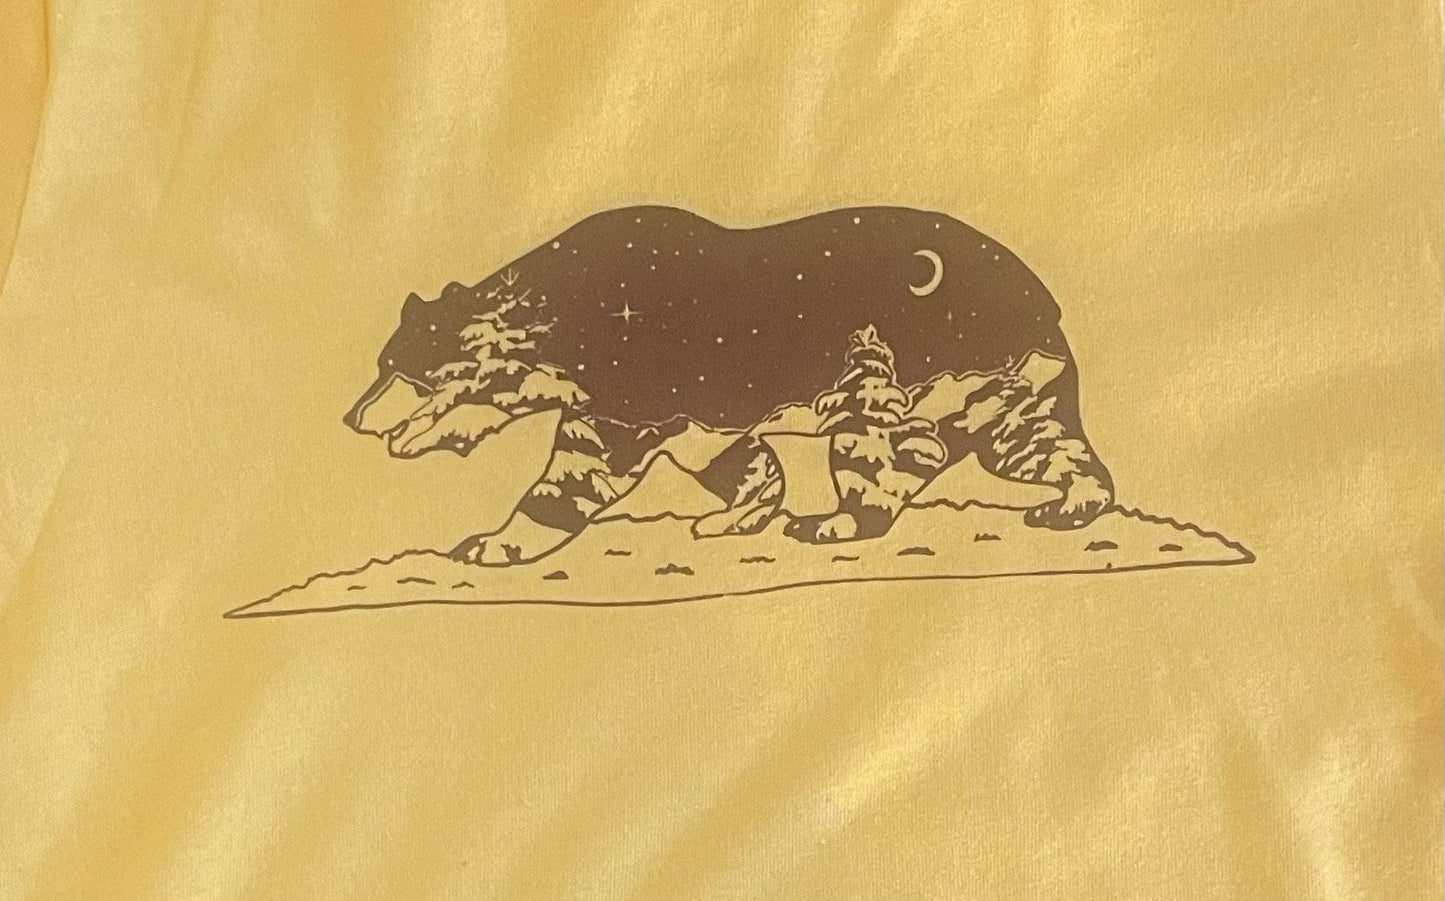 Kids California Grizzly Bear T-shirt